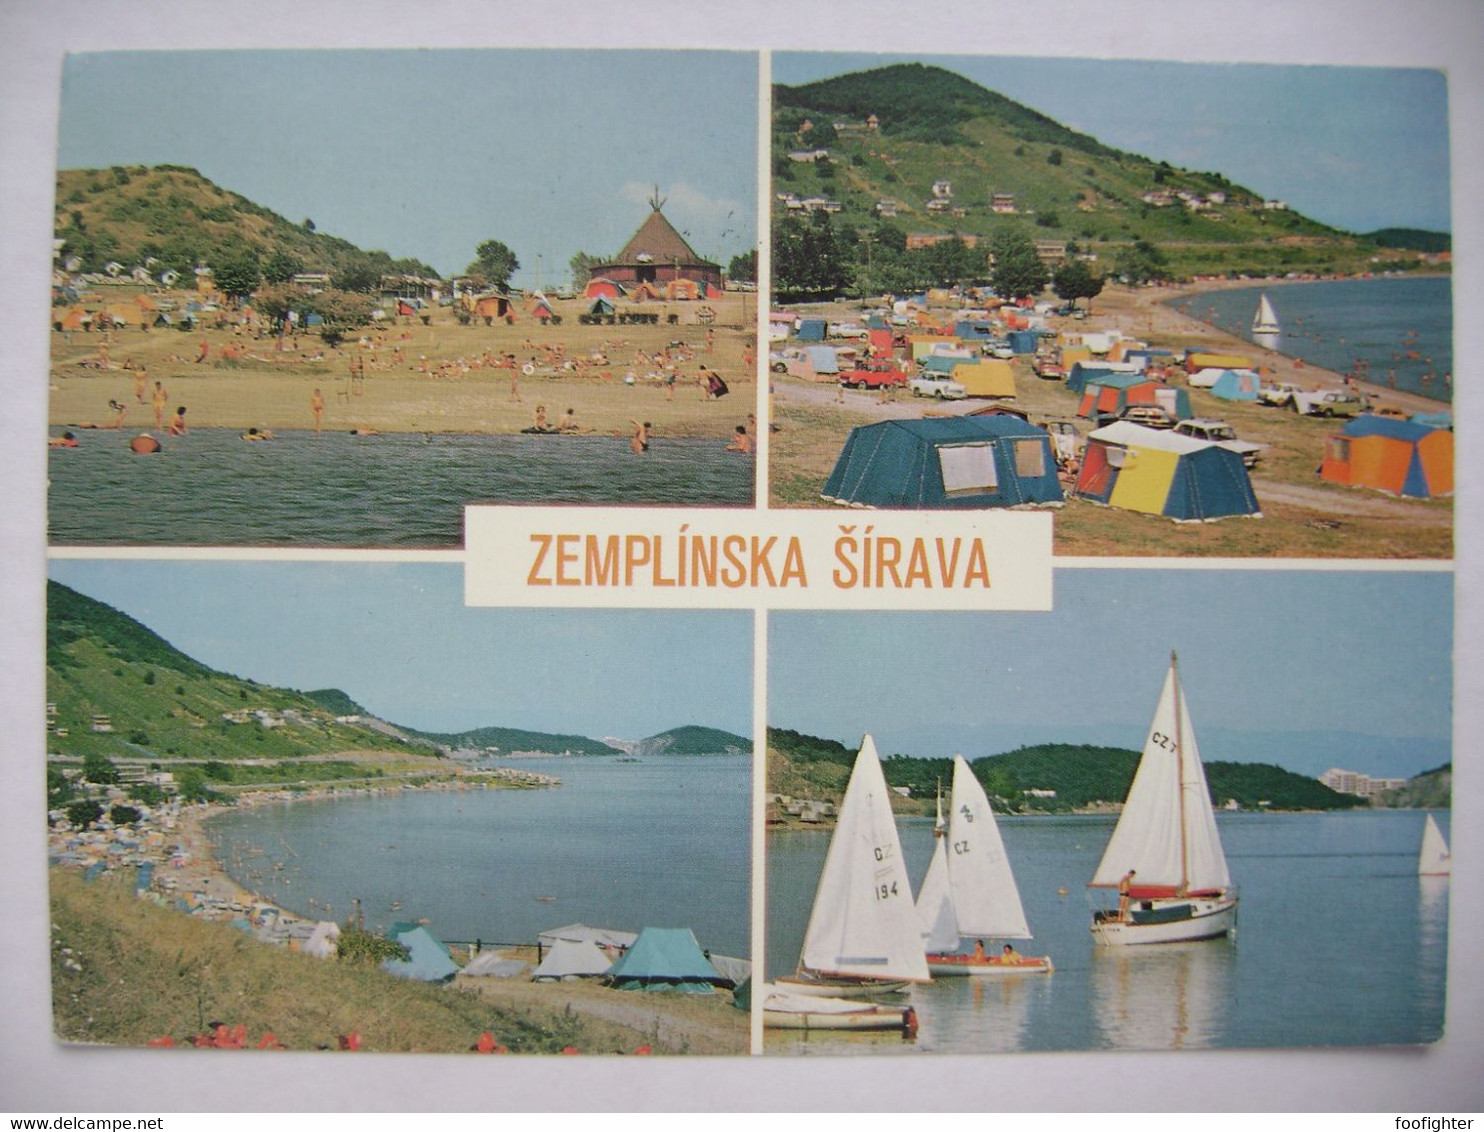 Zemplinska Sirava - Okres Michalovce, Plaz, Camping, Horka, Jachting - Posted 1985 - Slowakei